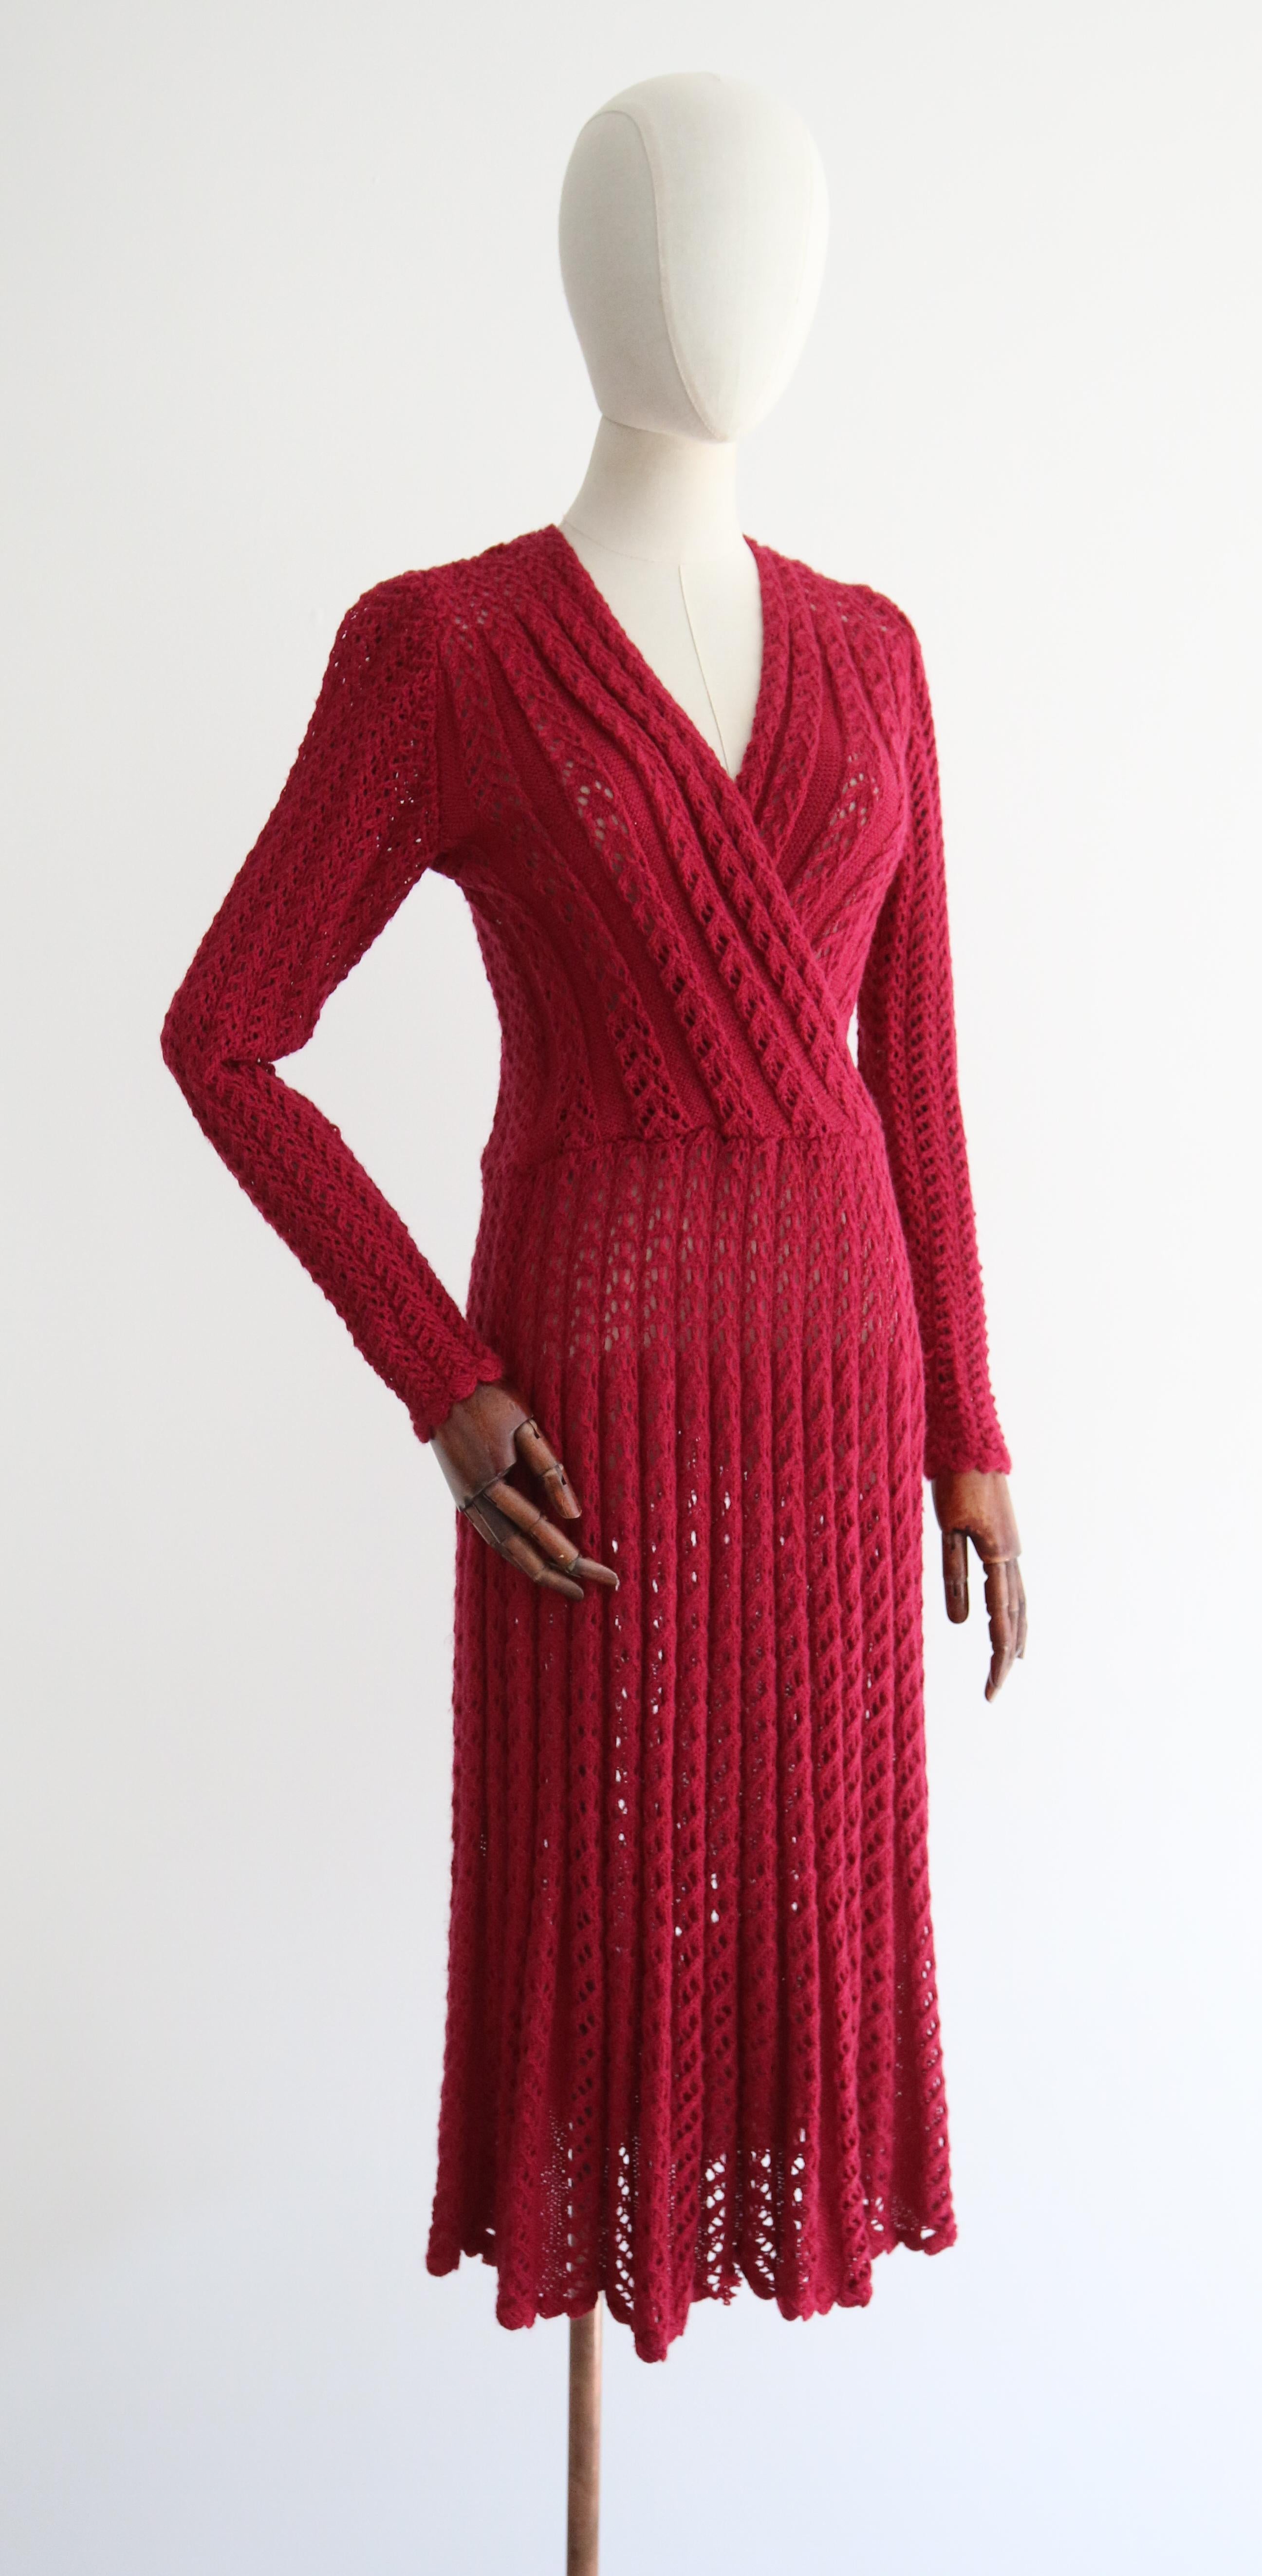 Women's Vintage 1940's Magenta Knitted Dress UK 10-12 US 6-8 For Sale